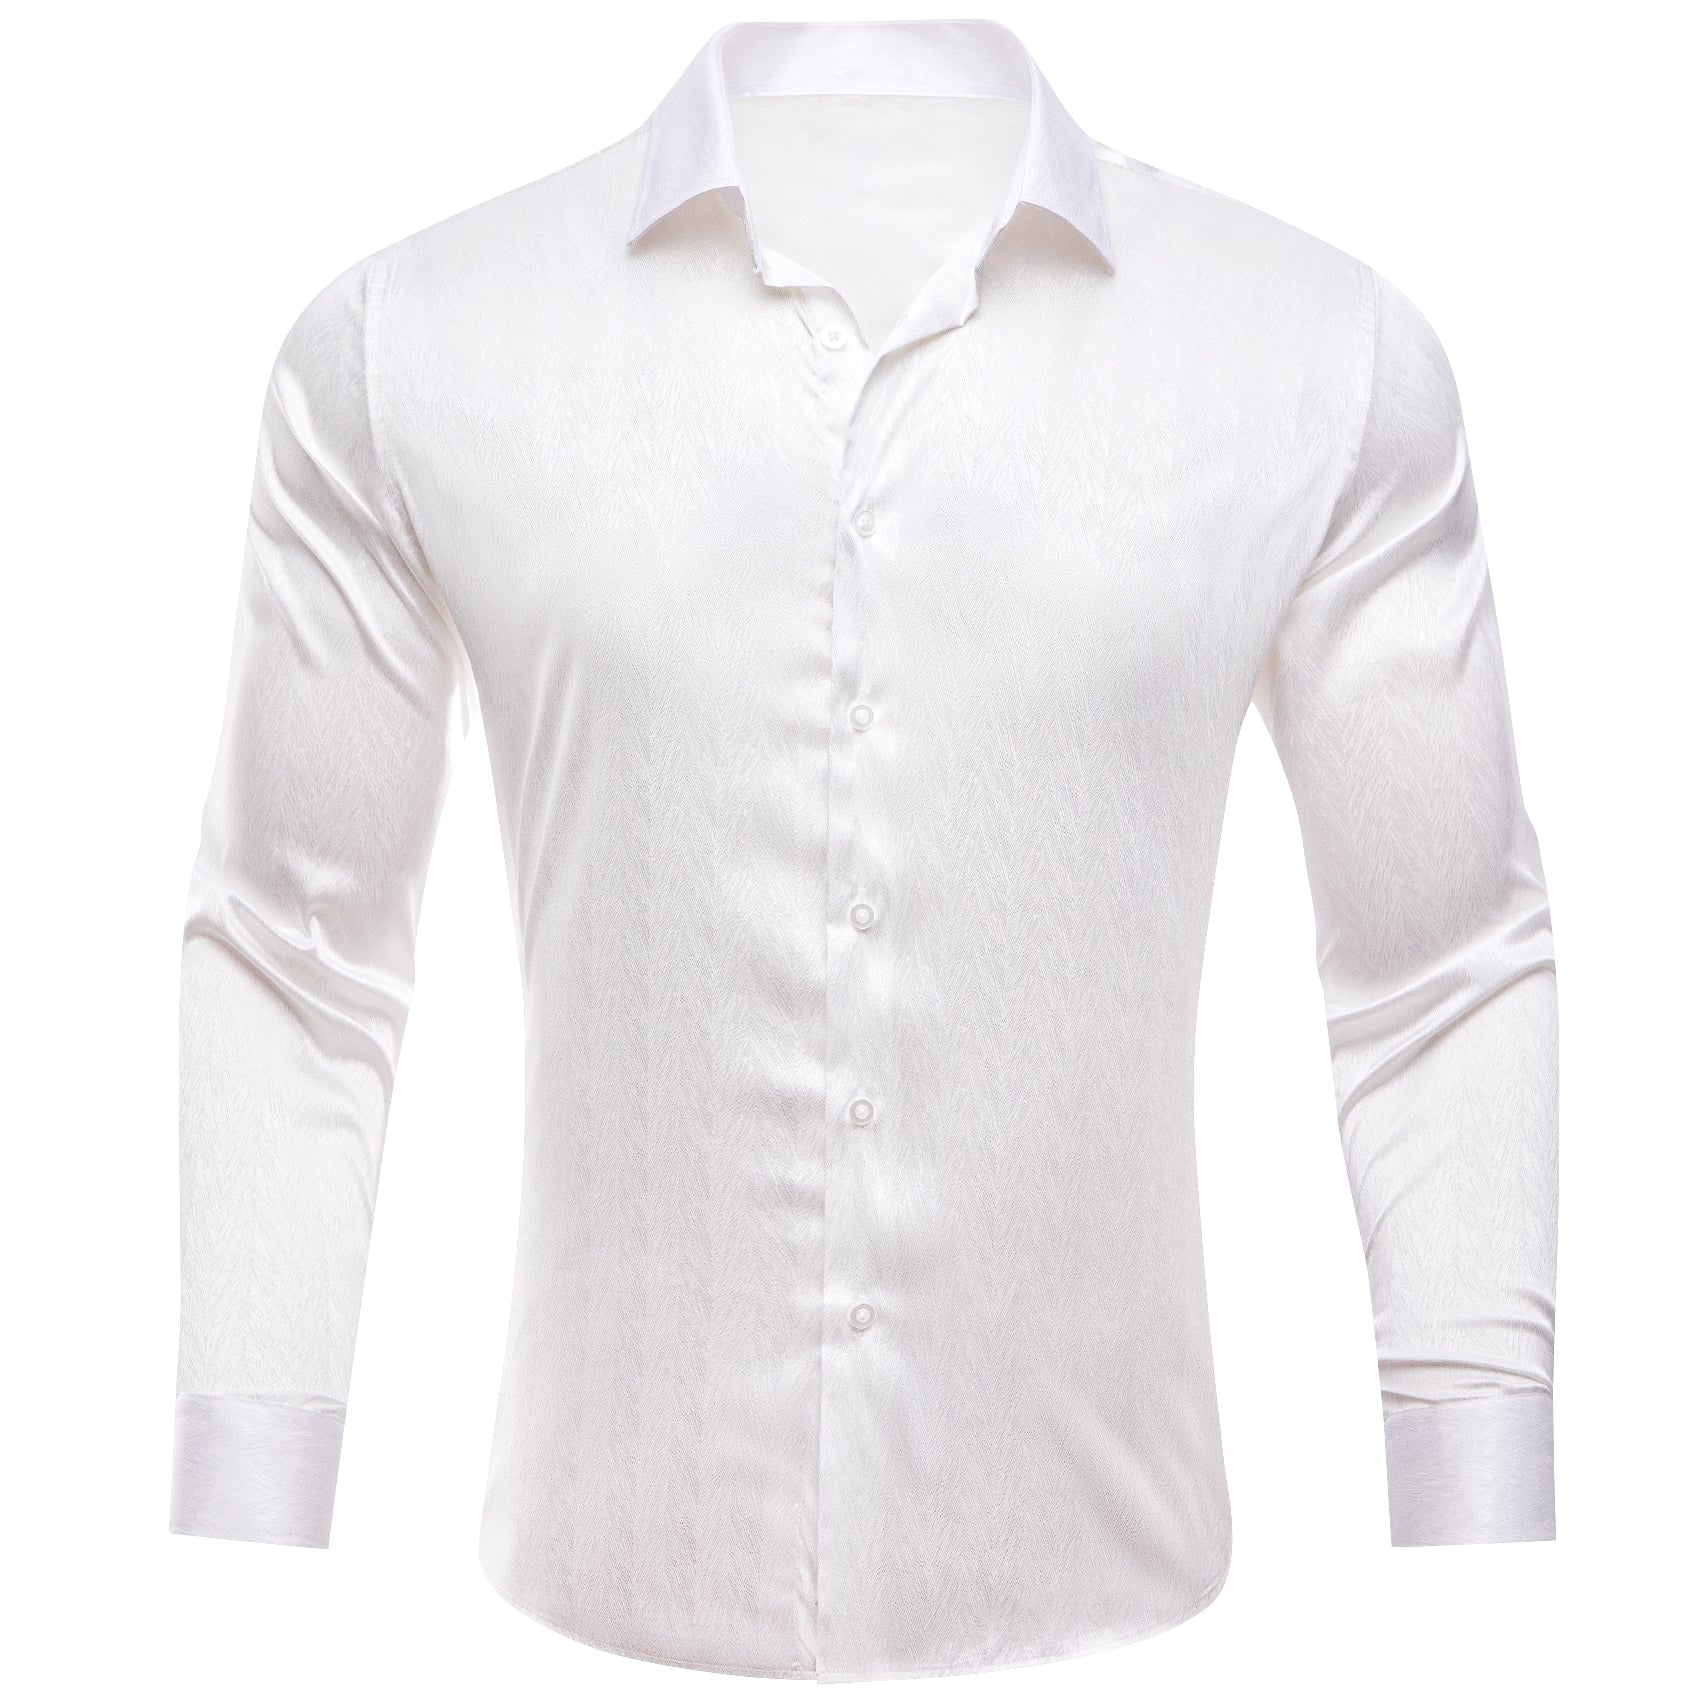 Barry.wang New White Solid Silk Men's Shirt